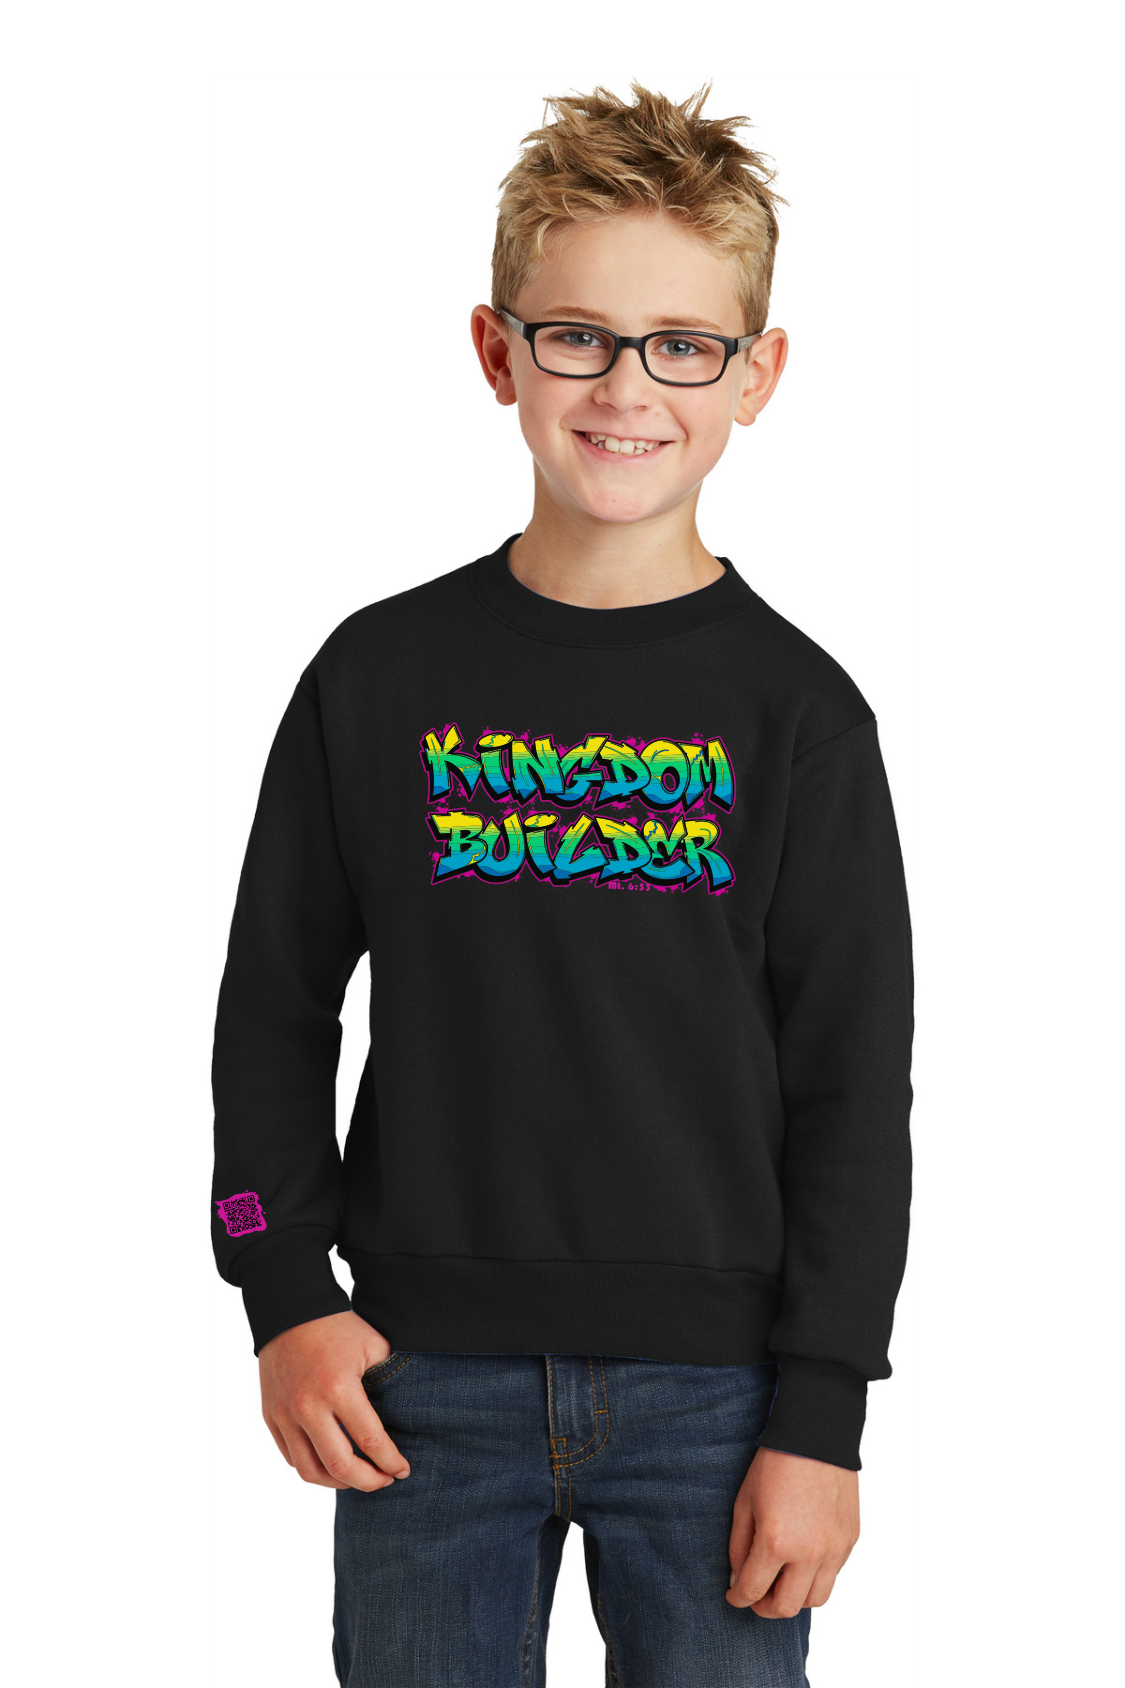 Kingdom Builder - Black Sweatshirt - Colored Graphics